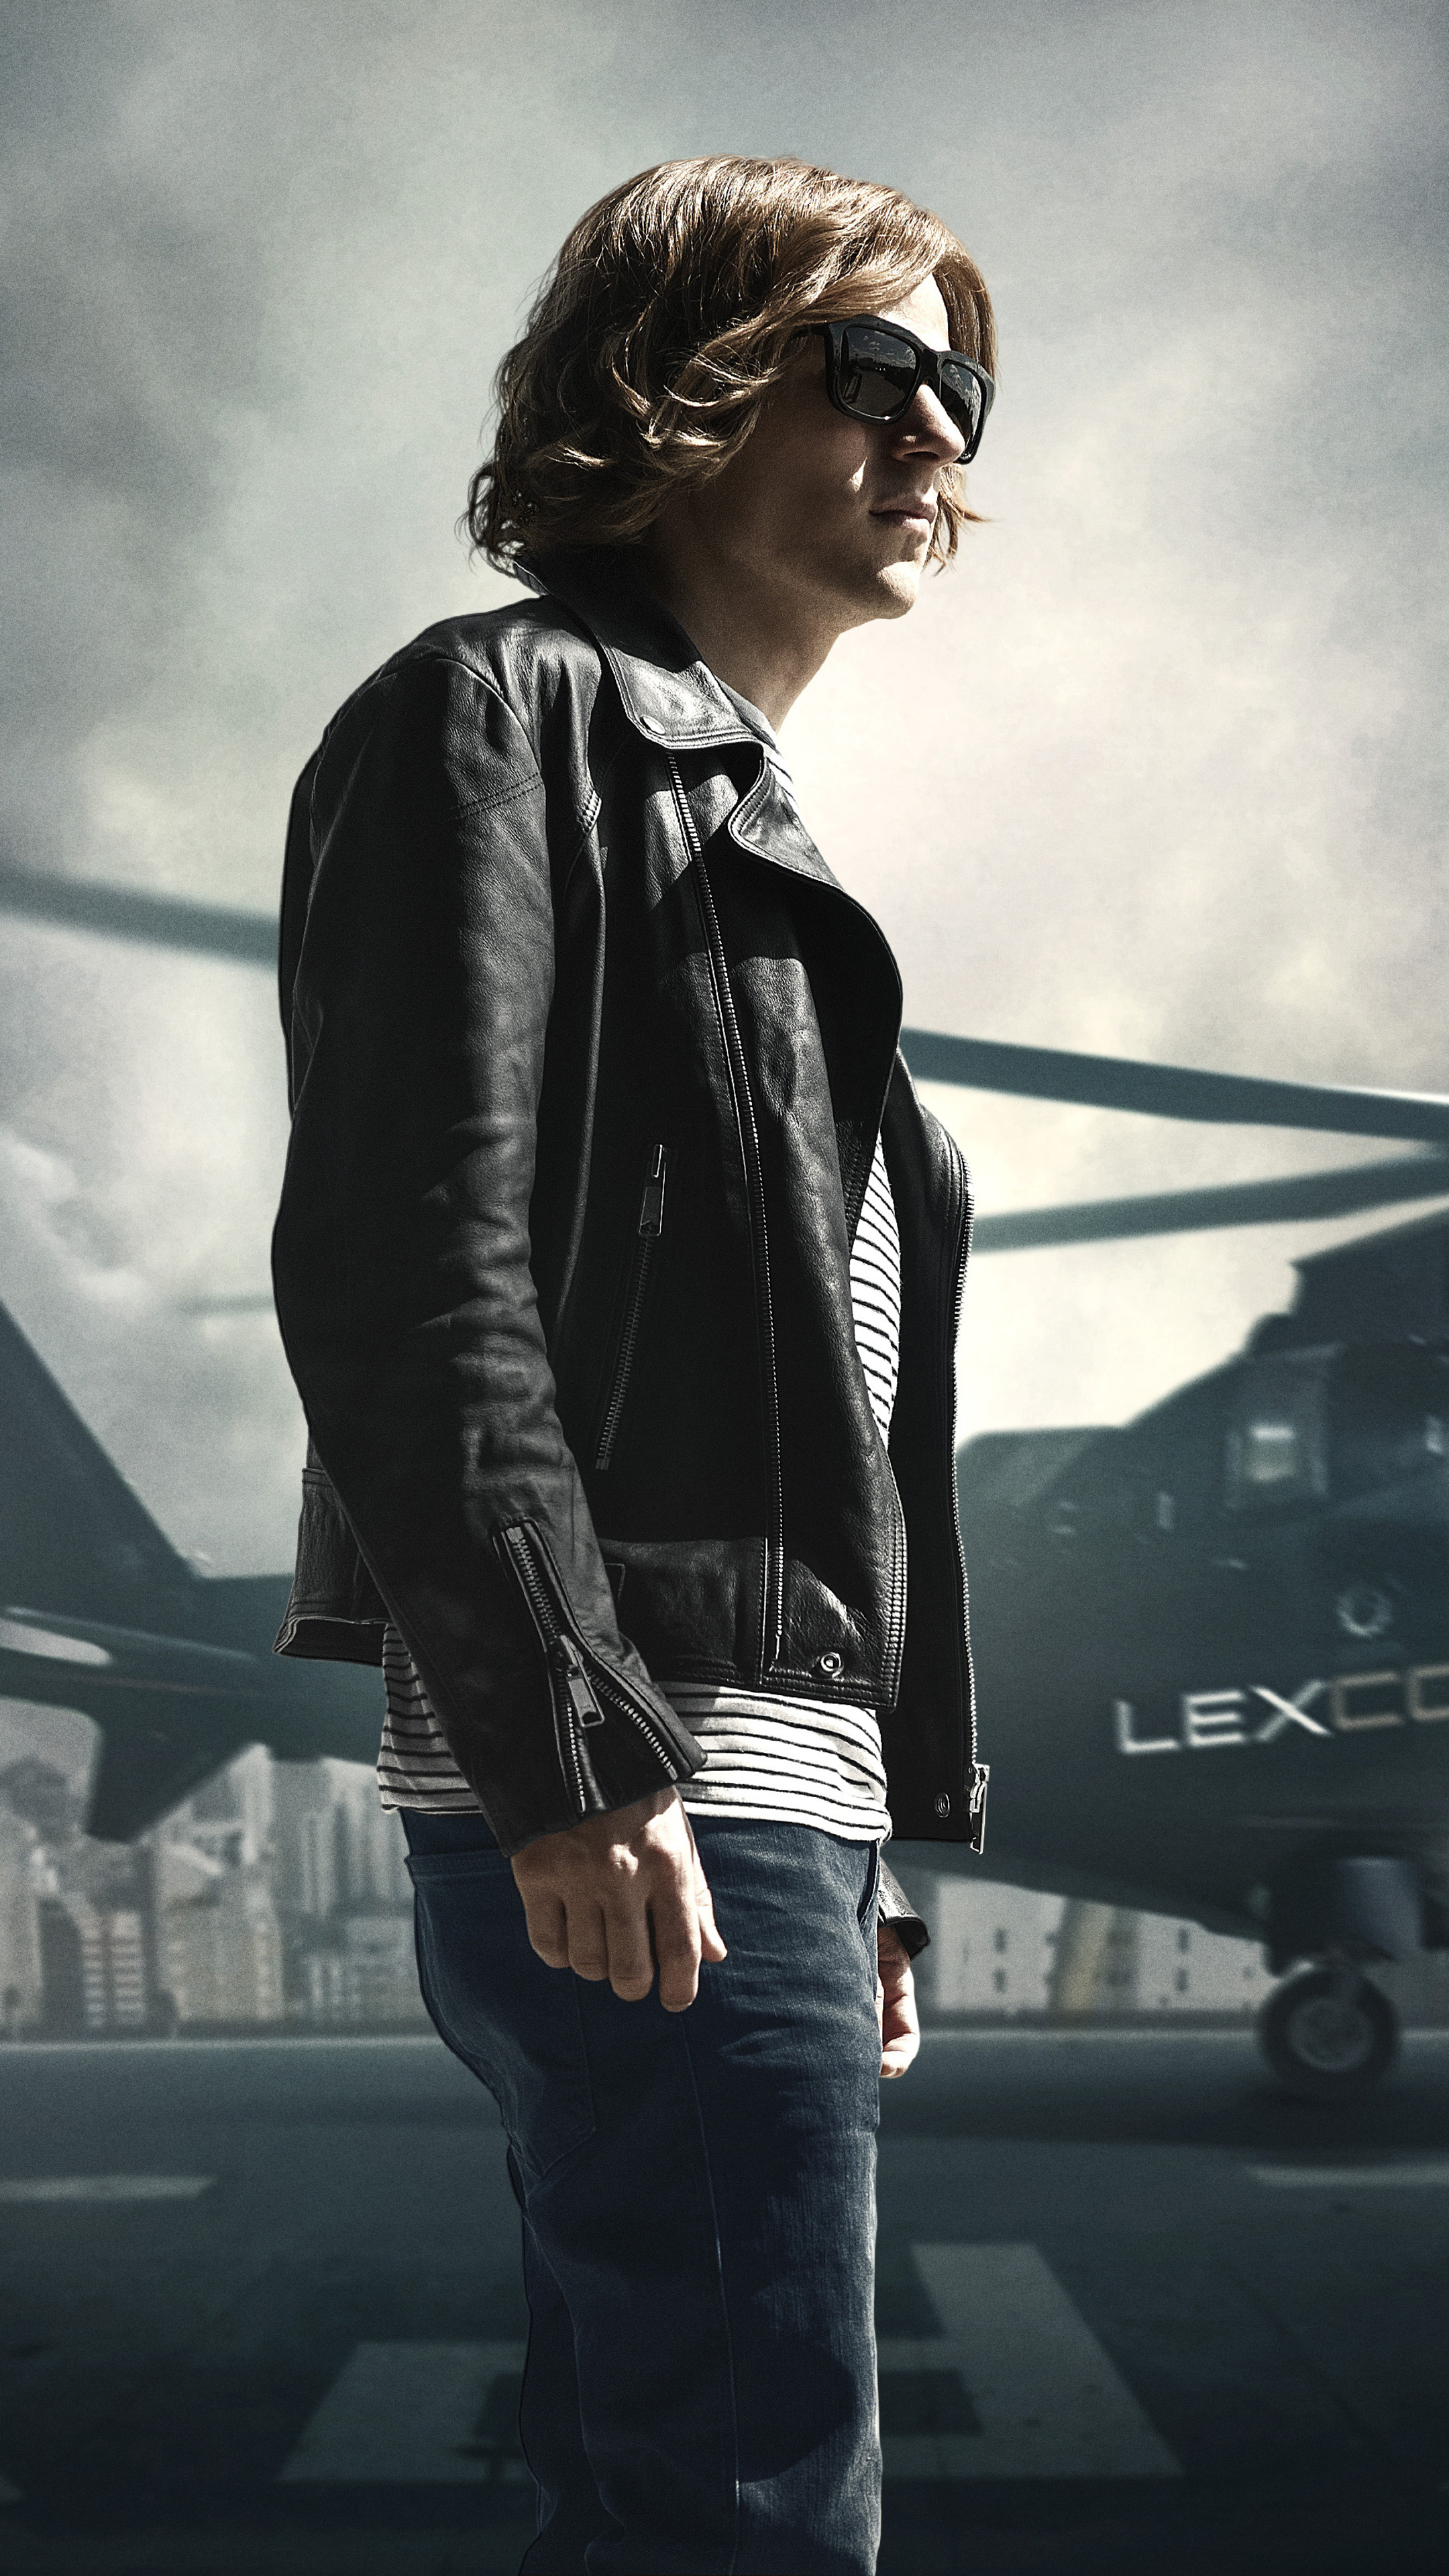 Lex Luthor: Portrayed by Jesse Eisenberg in the 2016 film Batman v Superman: Dawn of Justice. 2160x3840 4K Background.